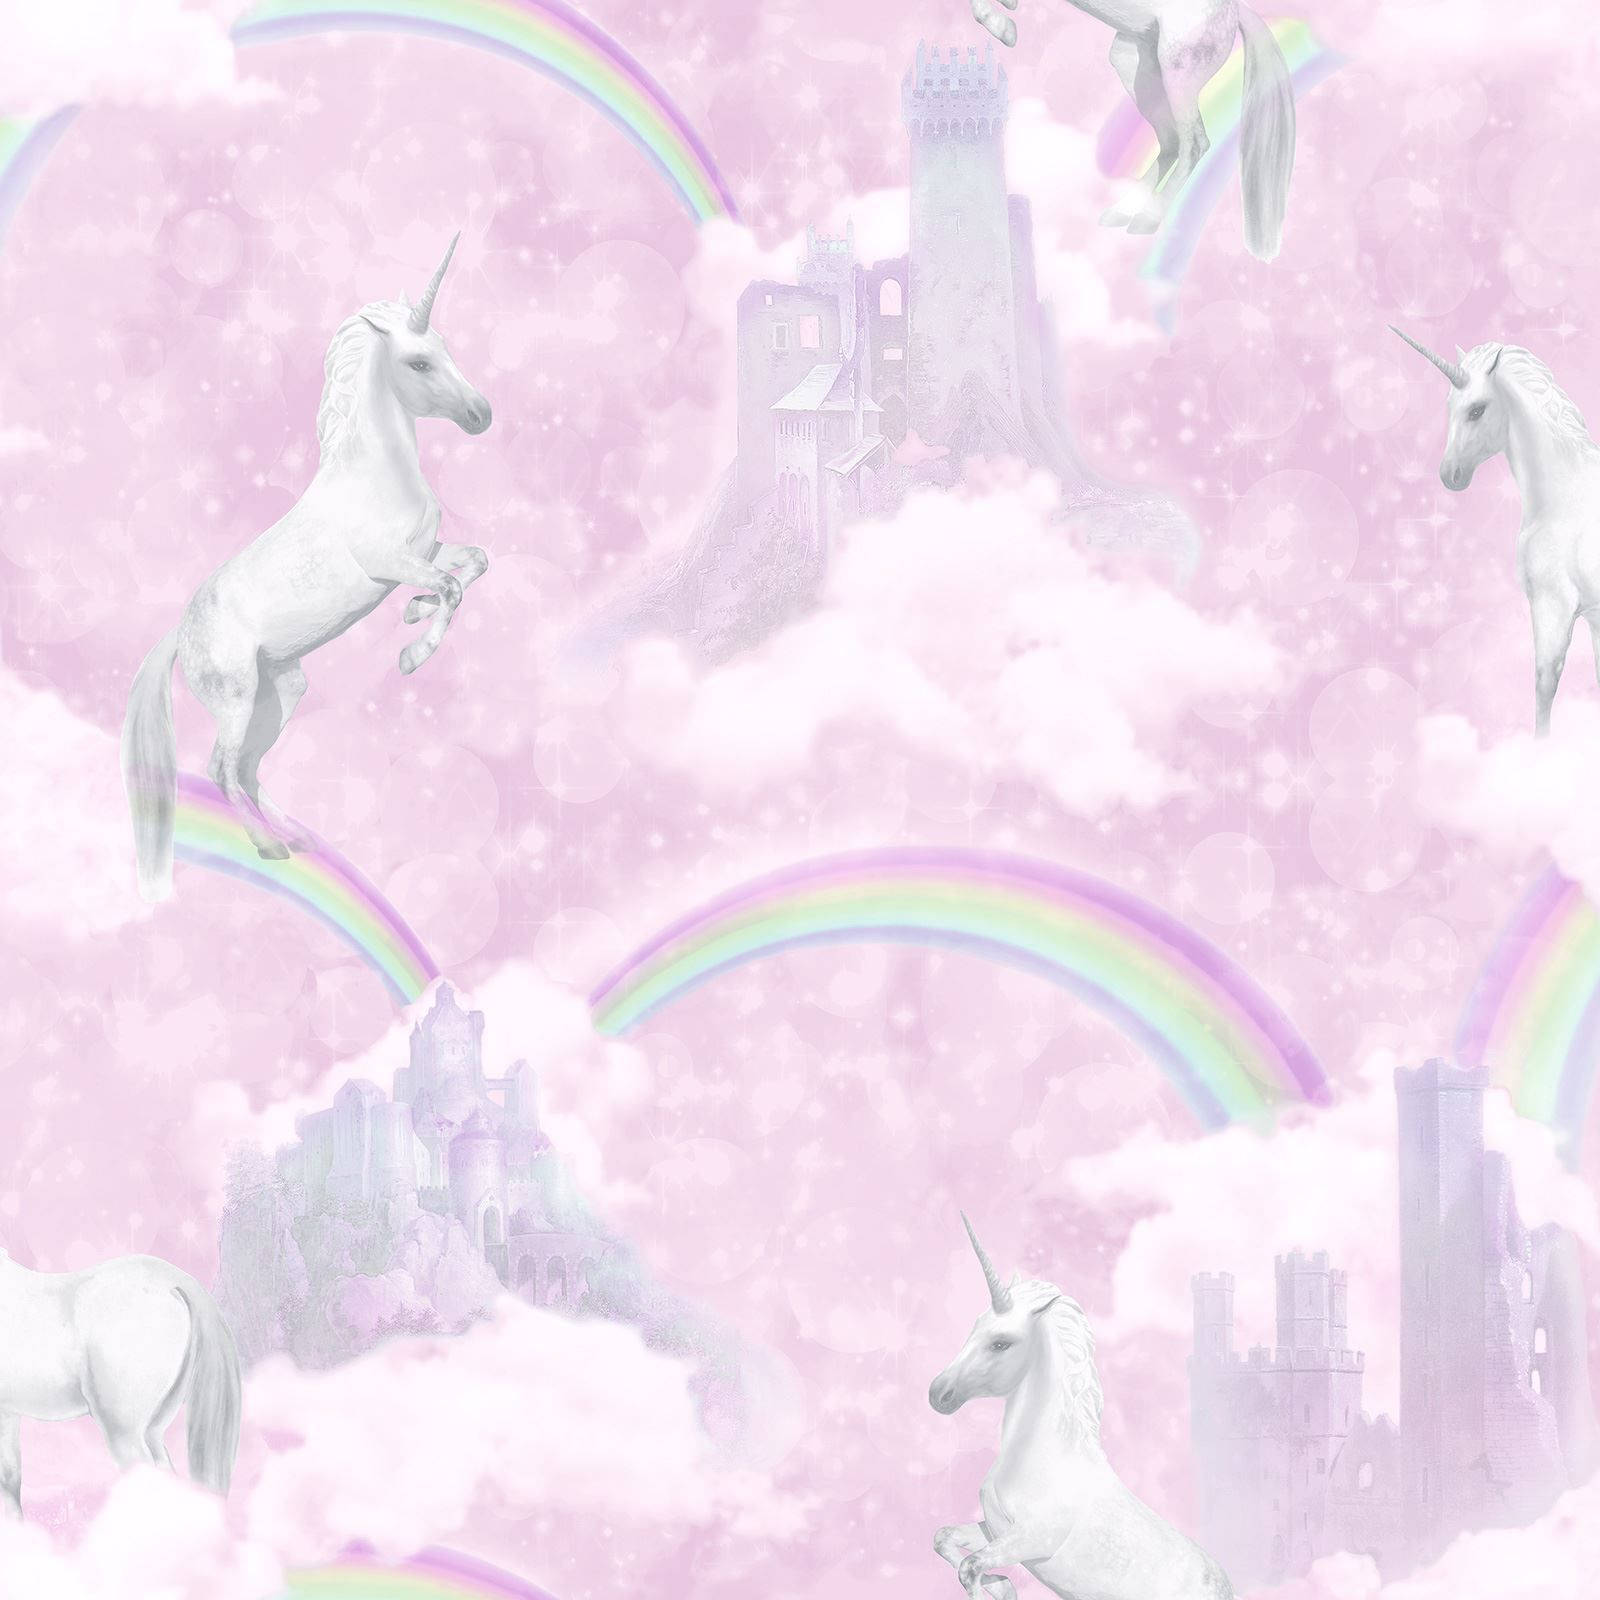 Magical Unicorn enjoying a quiet moment on a prismatic backdrop Wallpaper